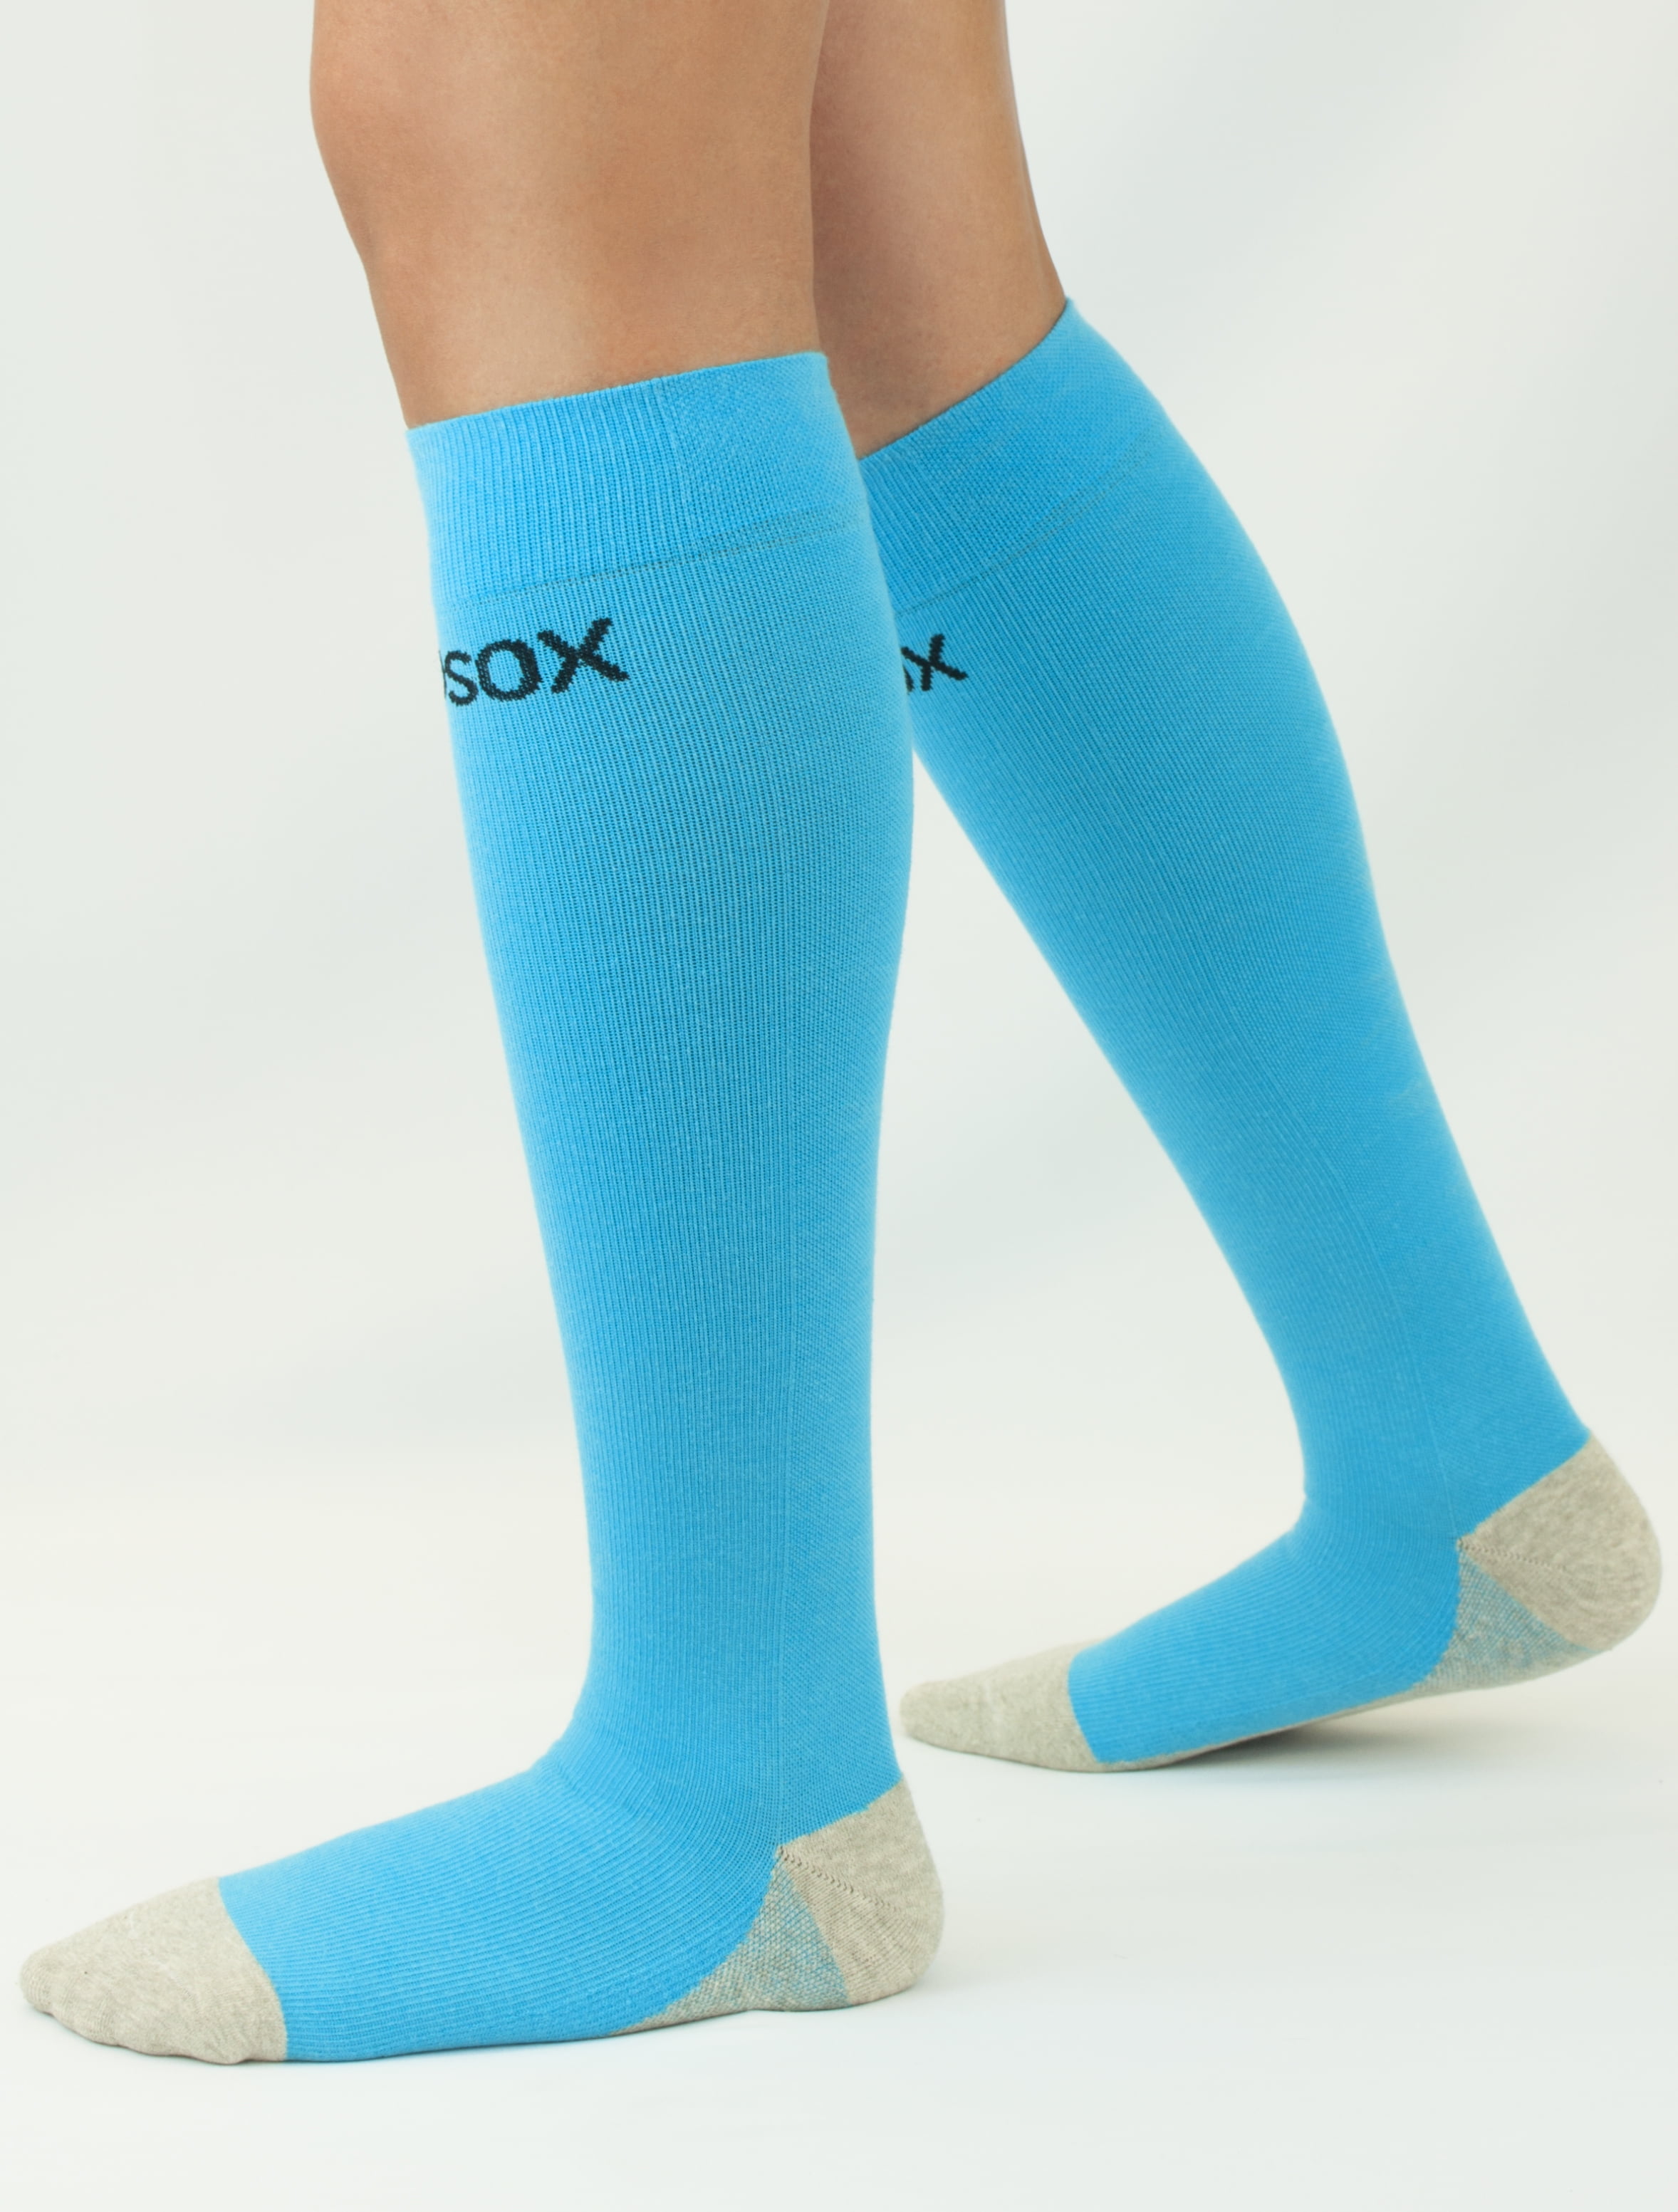 Noetuxi Compression Socks for Women Plus Size Nurse Maternity Pregnancy  Graduated Diabetic Compression Socks 2XL 3XL 4XL 5XL